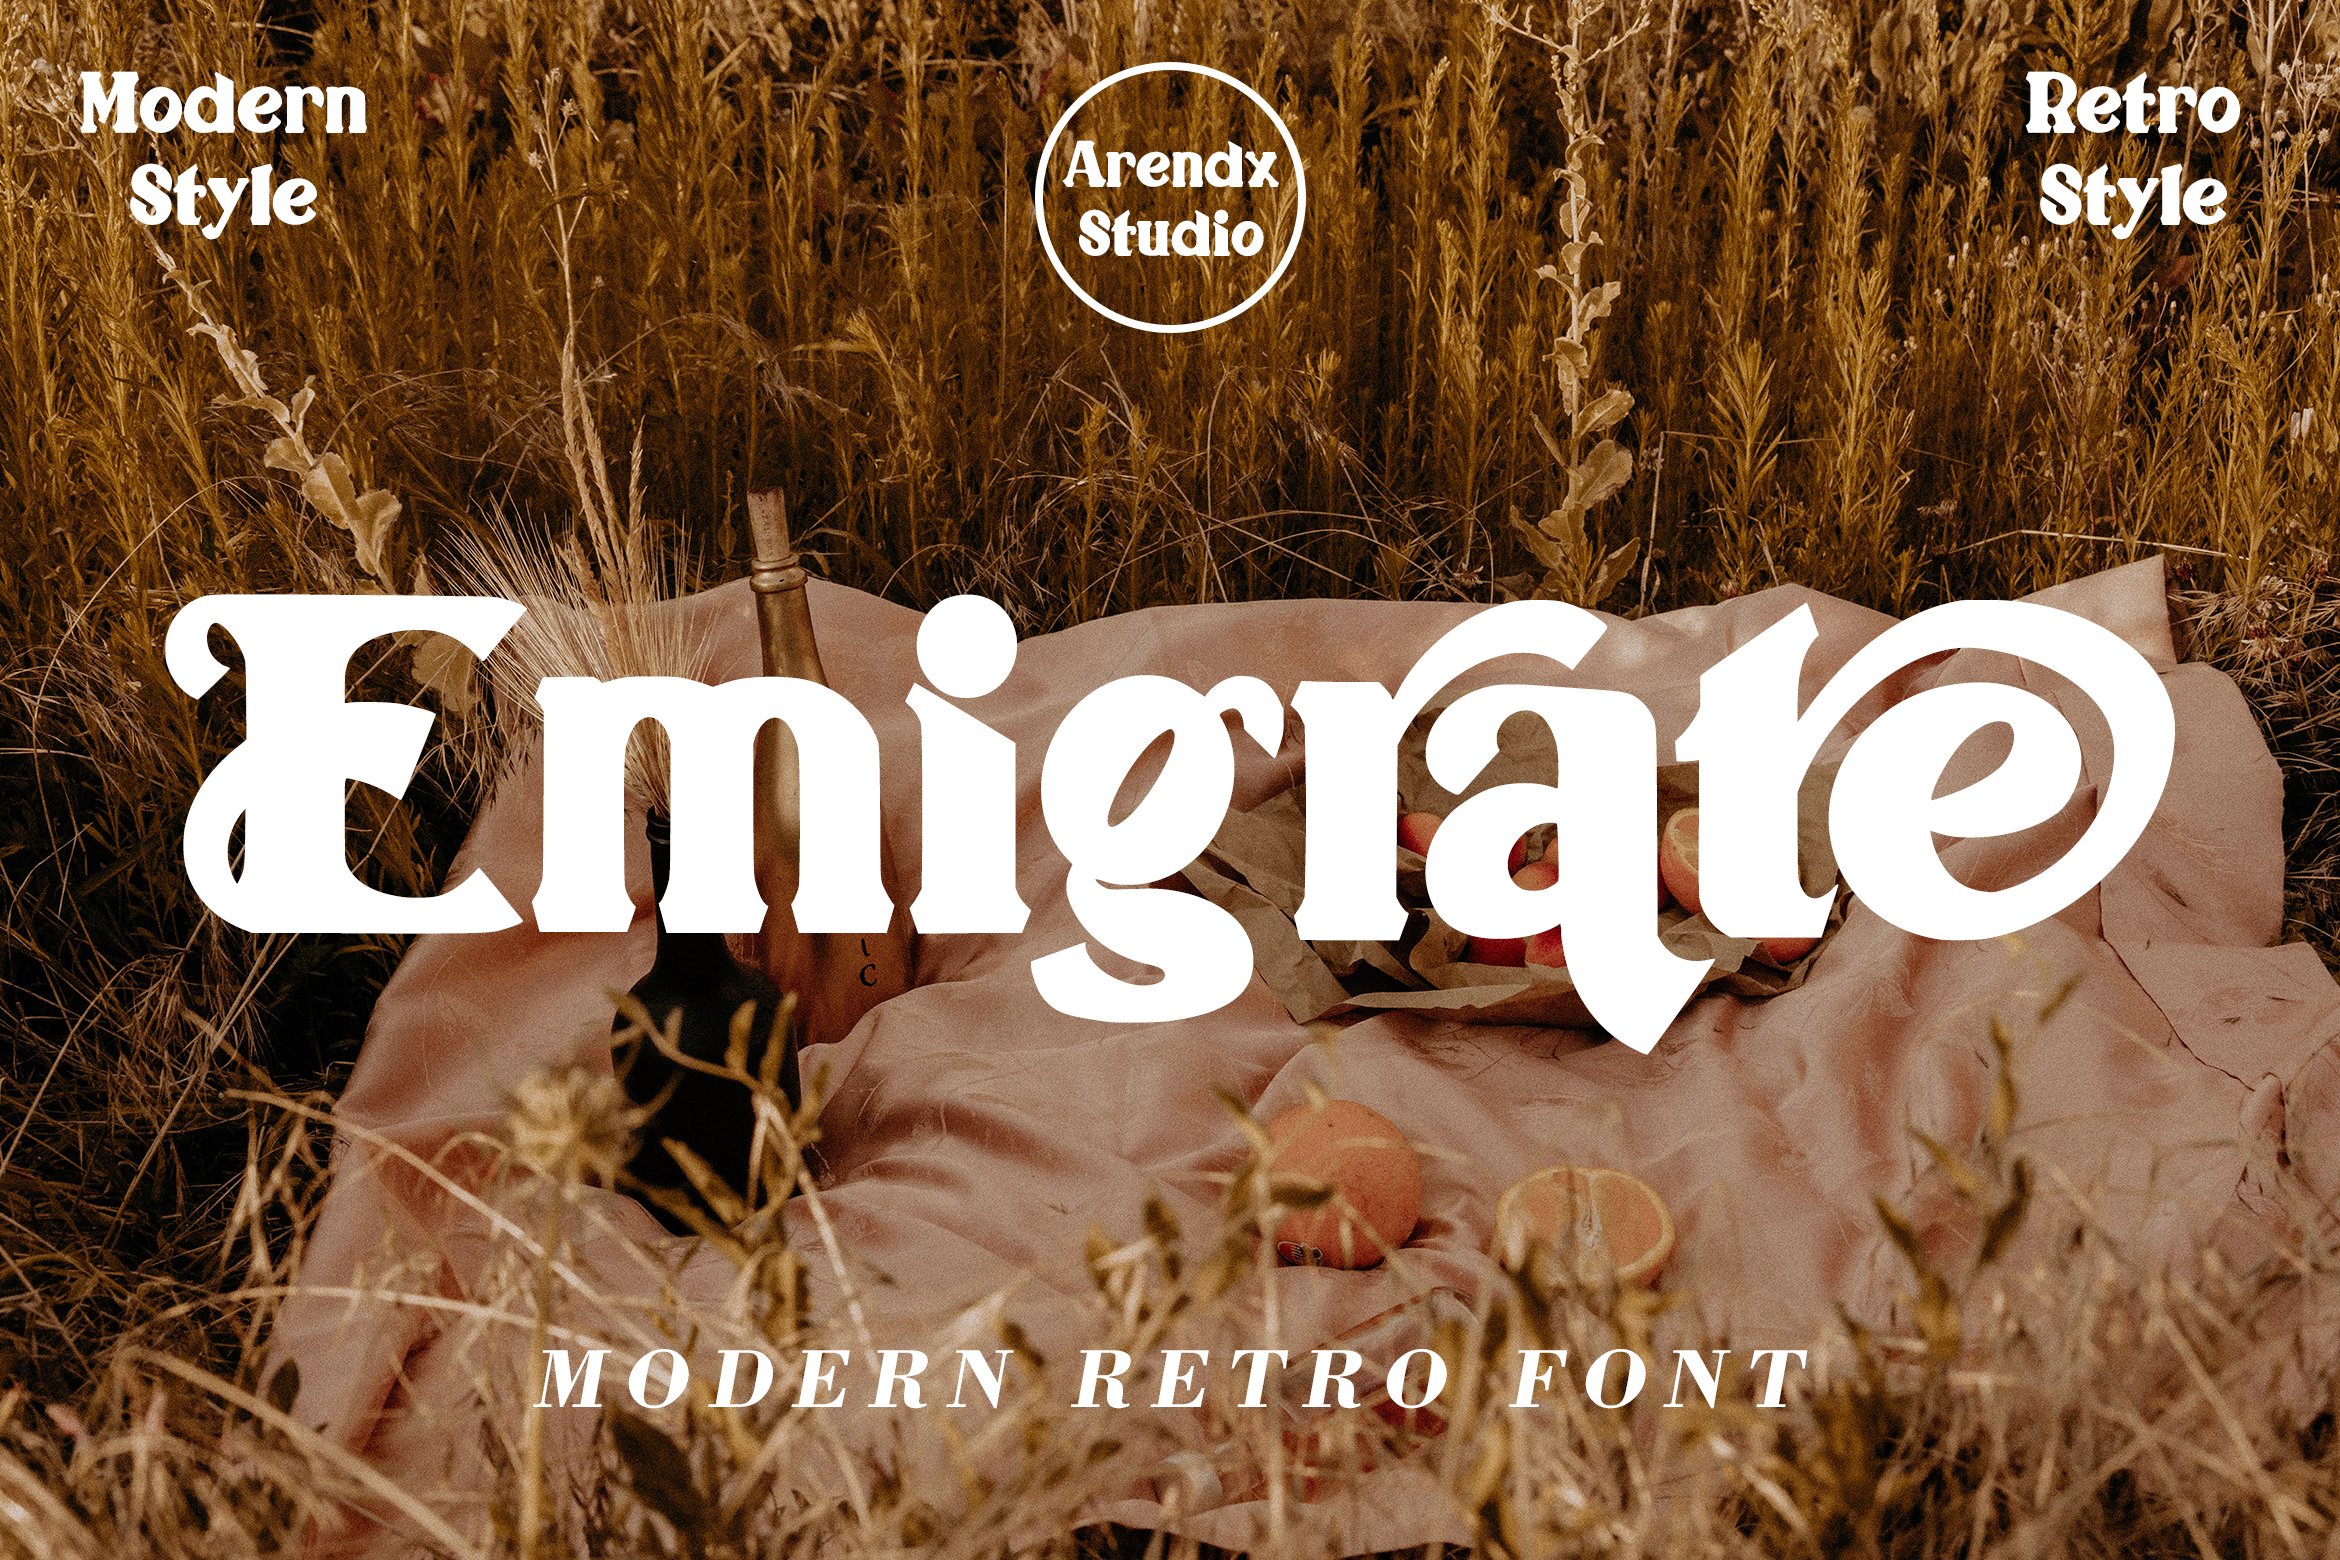 Emigrate - Modern Retro Font cover image.